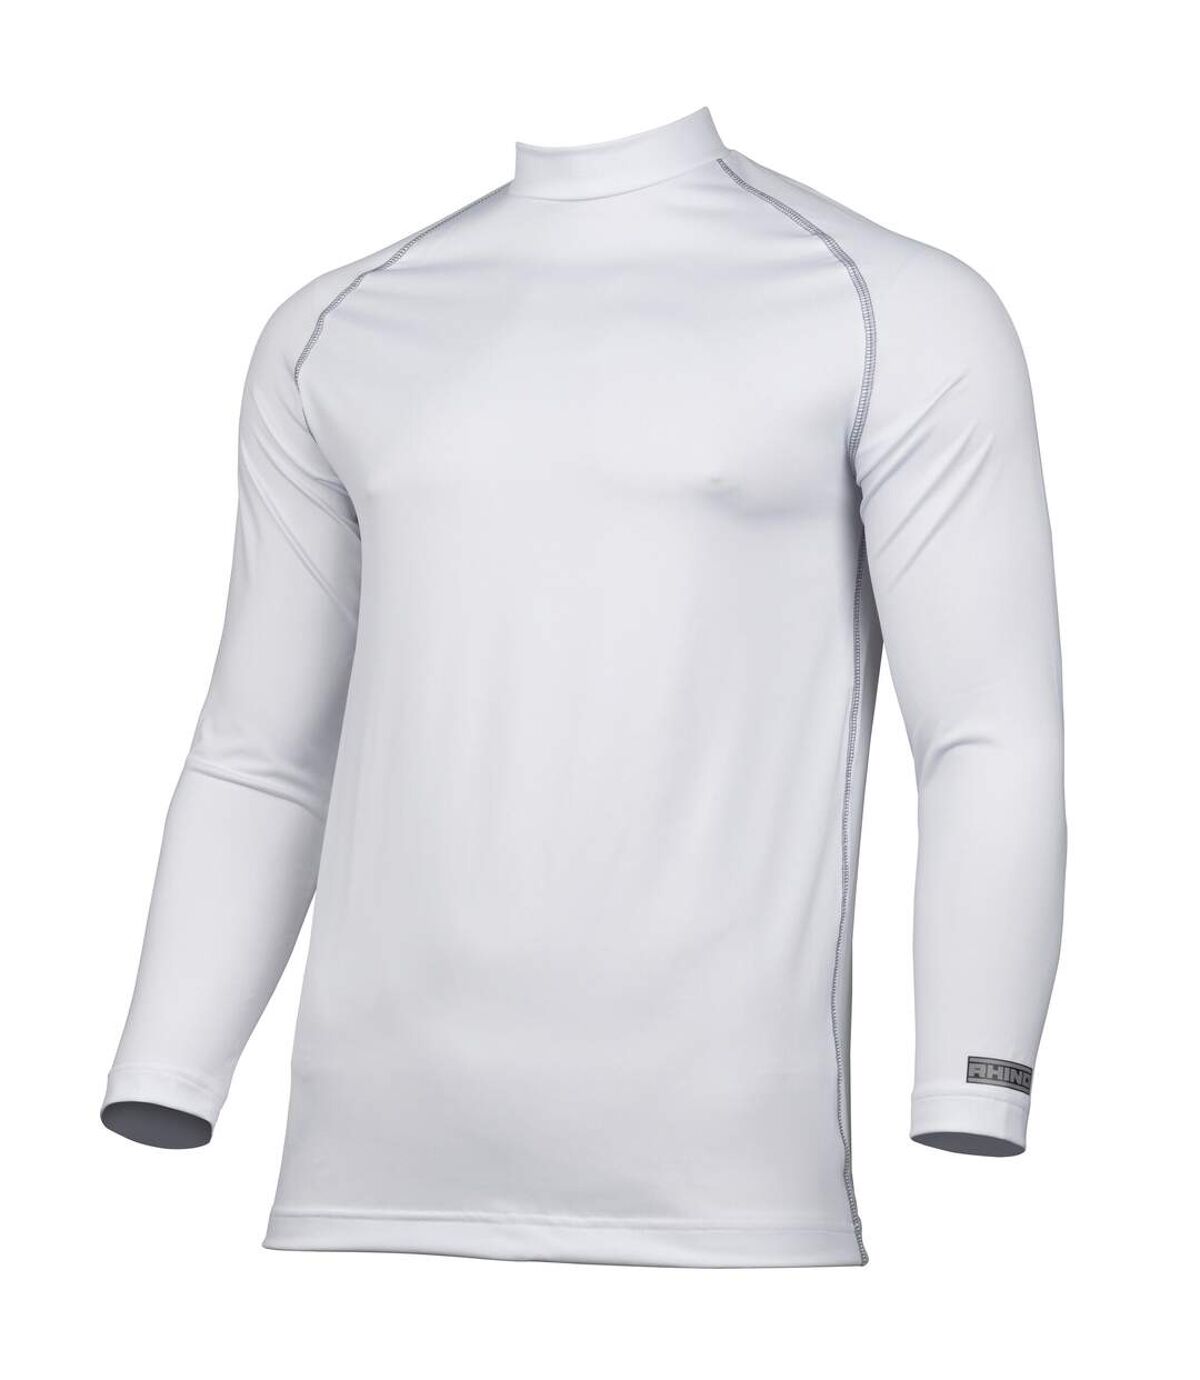 Rhino - T-shirt base layer à manches longues - Homme (Blanc) - UTRW1276